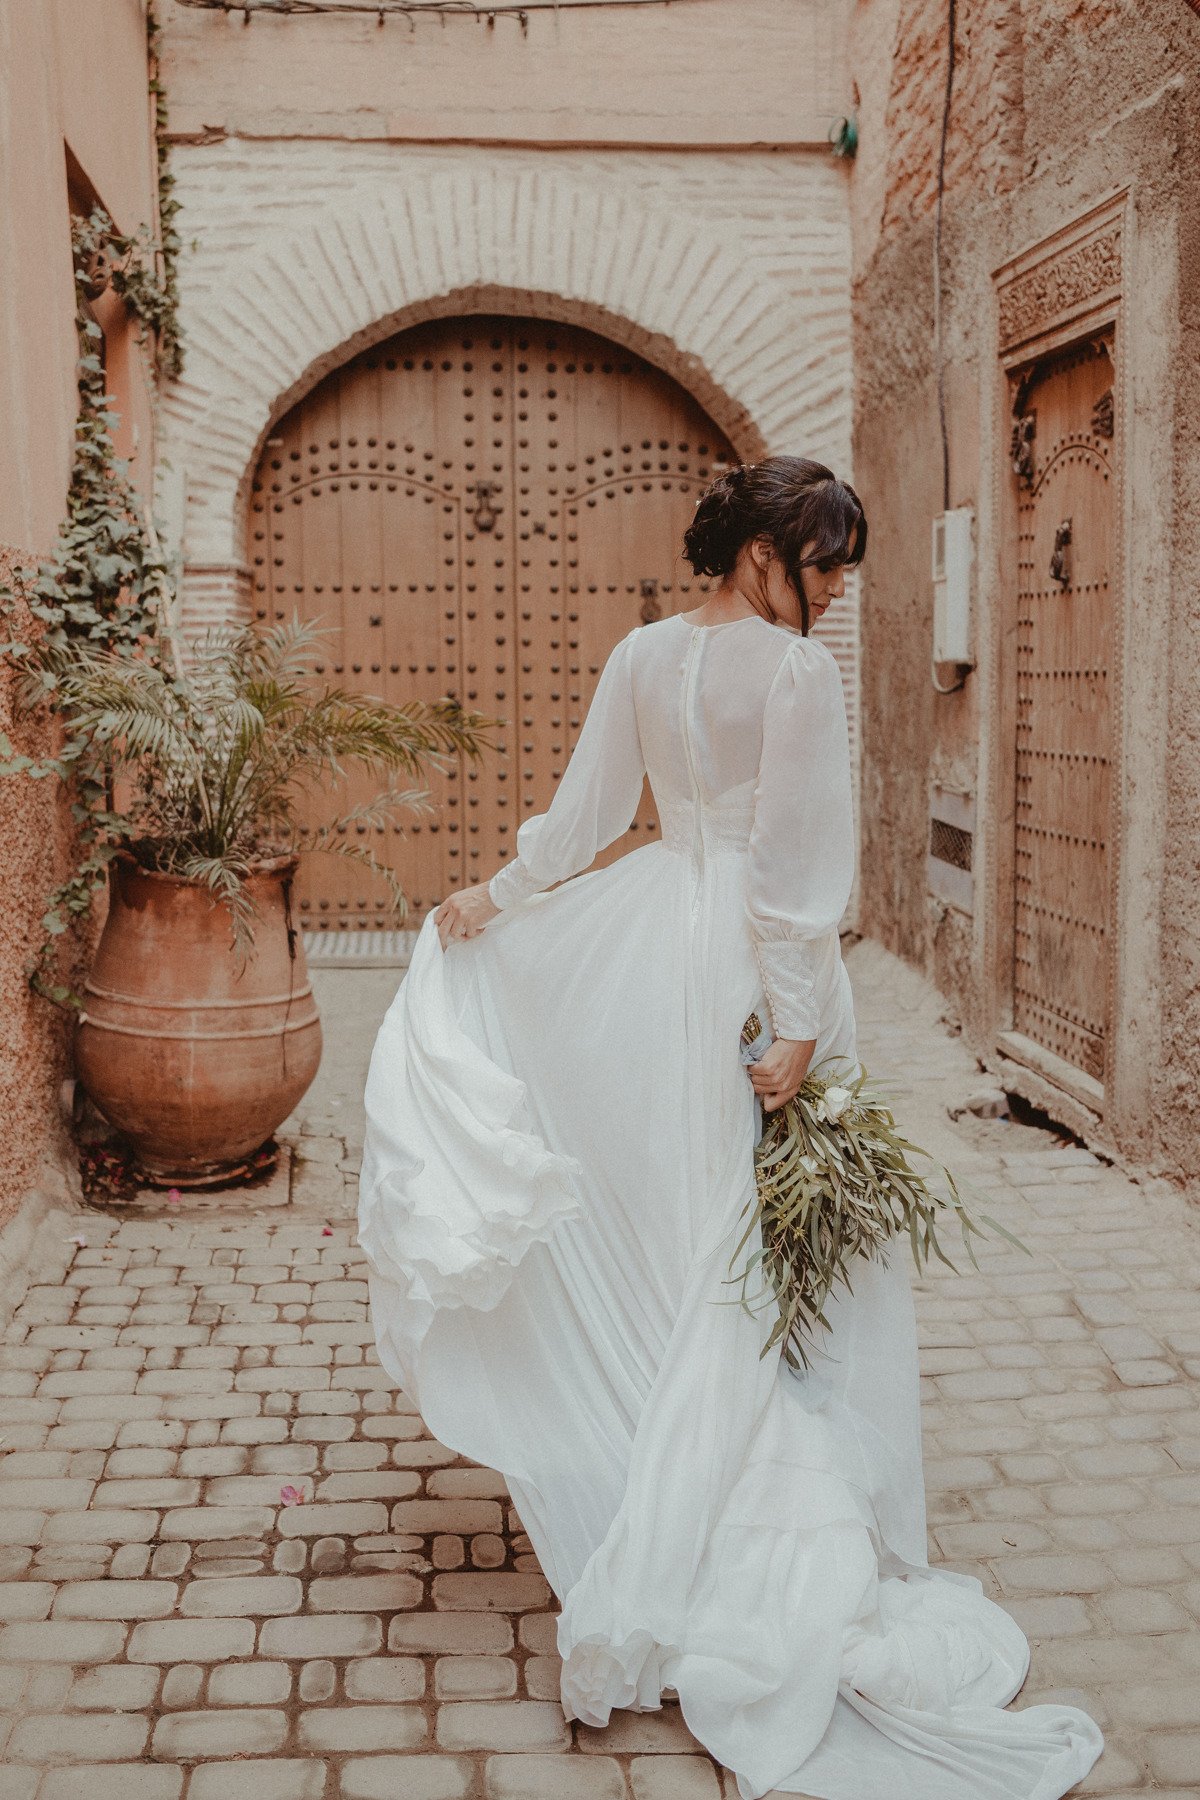 Intimate Destination Wedding Inspiration Shoot In Marrakech